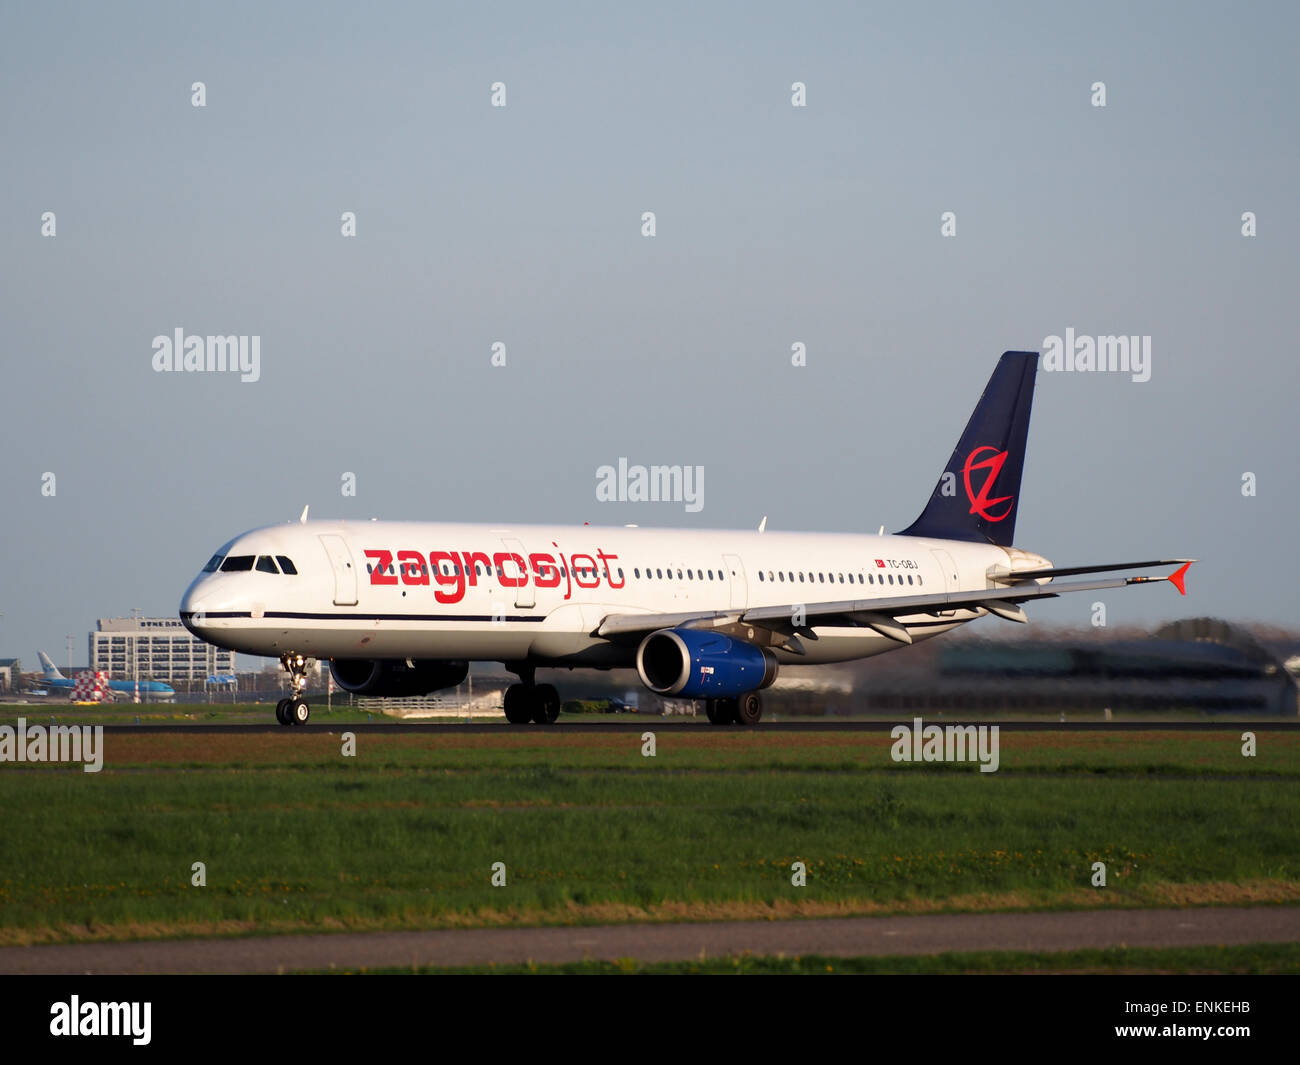 TC-OBJ Zagrosjet Airbus A321-231 - cn 835 despegar de Polderbaan, Schiphol (AMS - EHAM) al atardecer Foto de stock